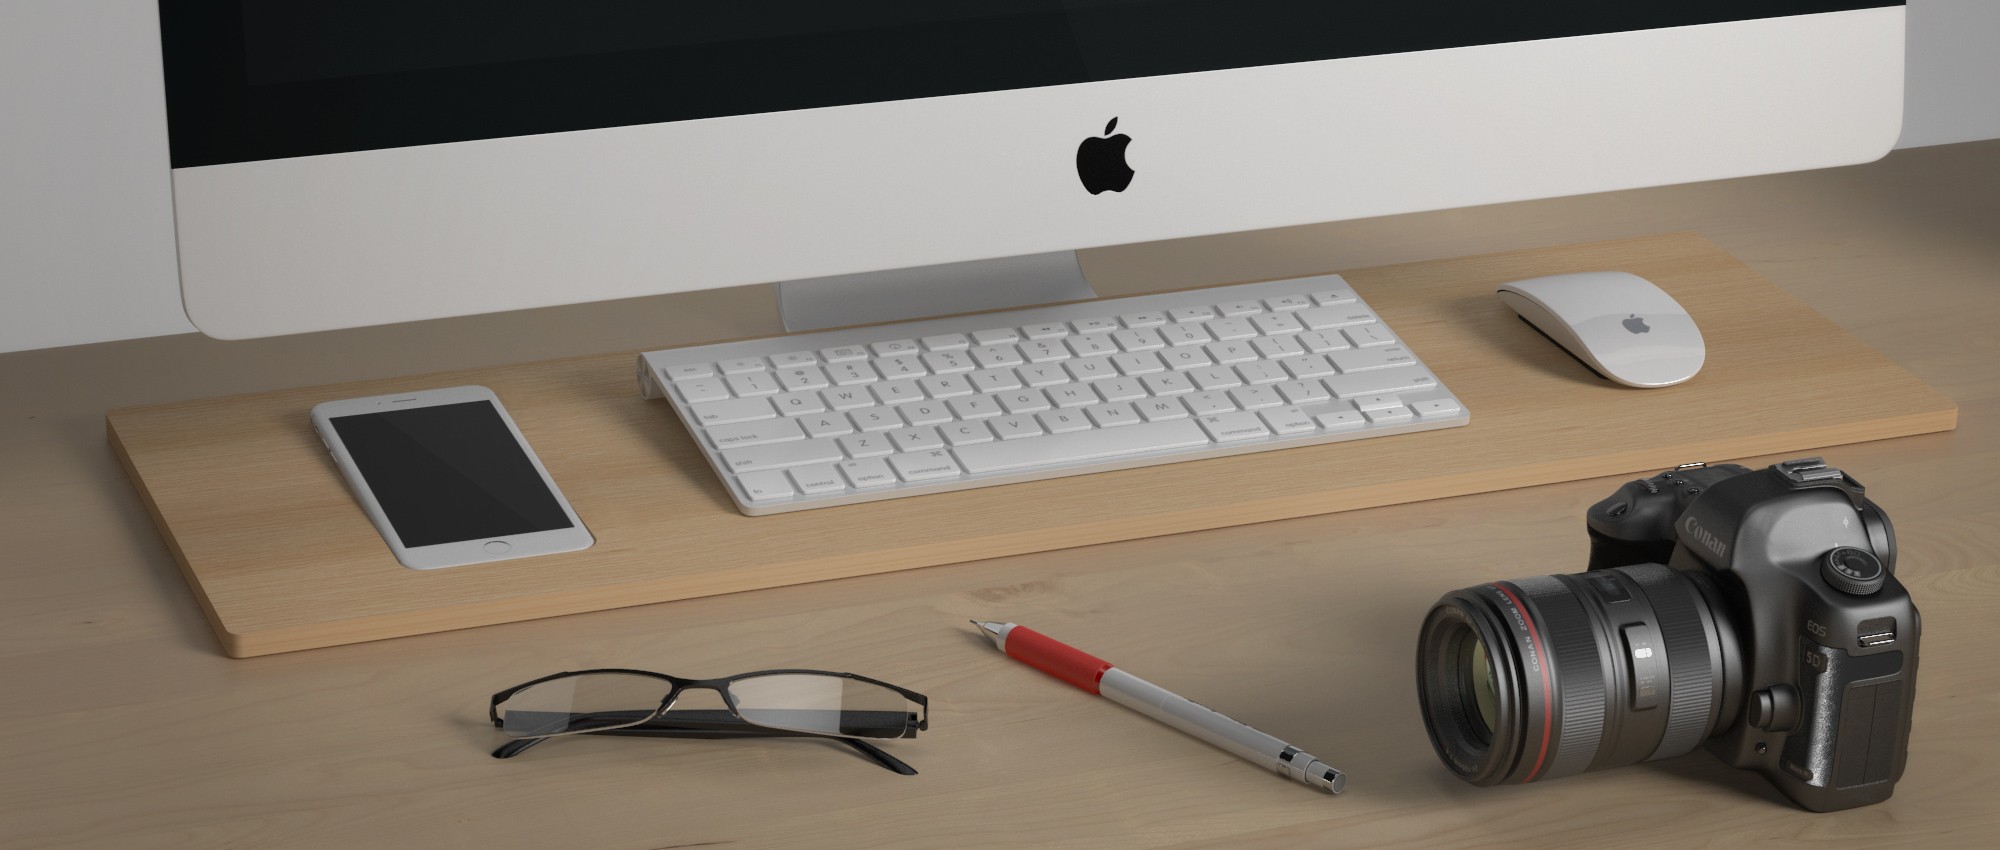 Tamm iPhone 5s Dock & iMac Desk Organizer